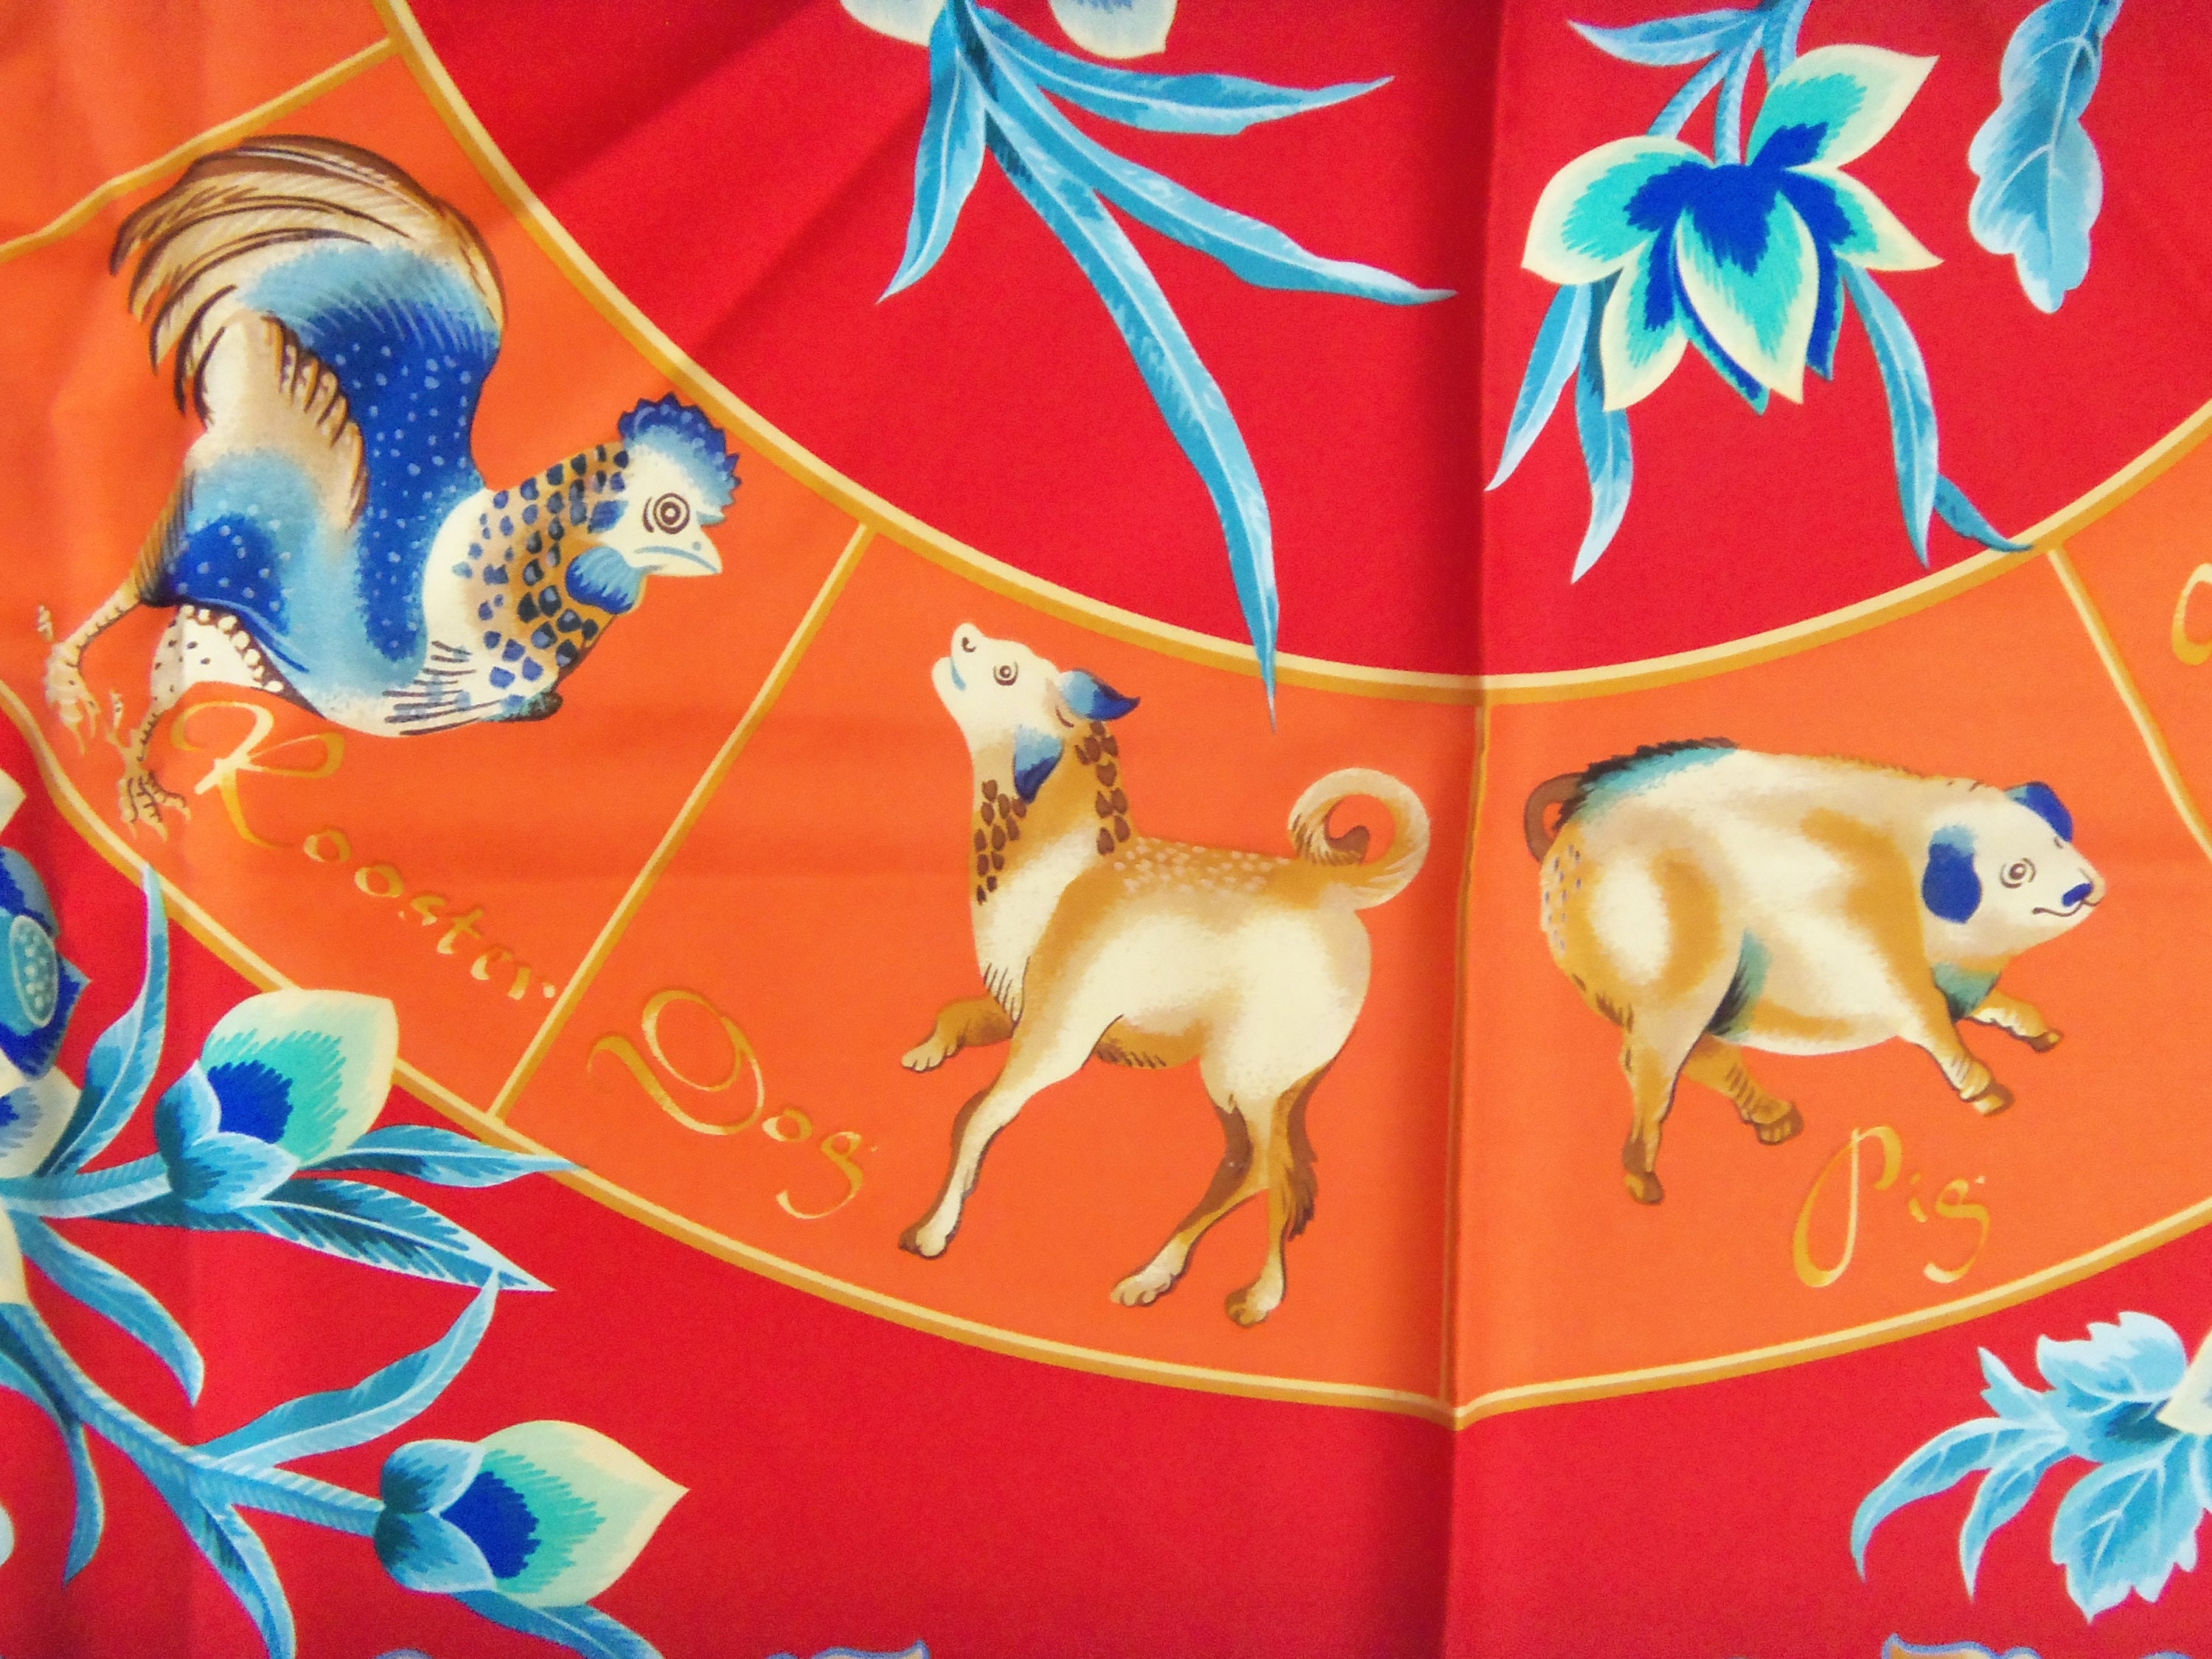 Vintage JOOP Silk Scarf Astrological Chinese Zodiac Design 